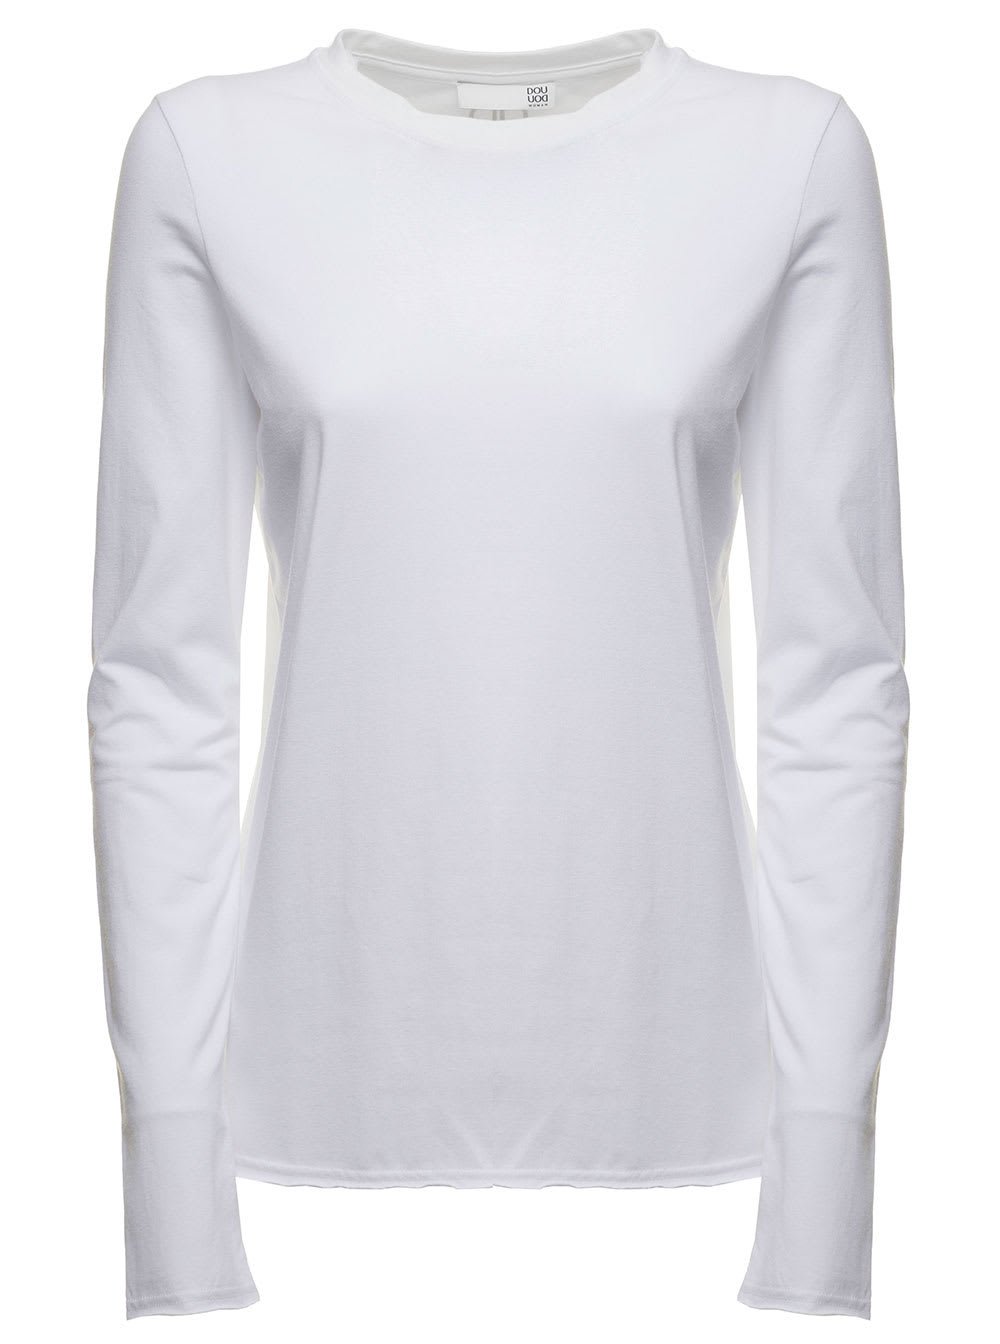 Douuod Womans White Cotton Long Sleeve T-shirt